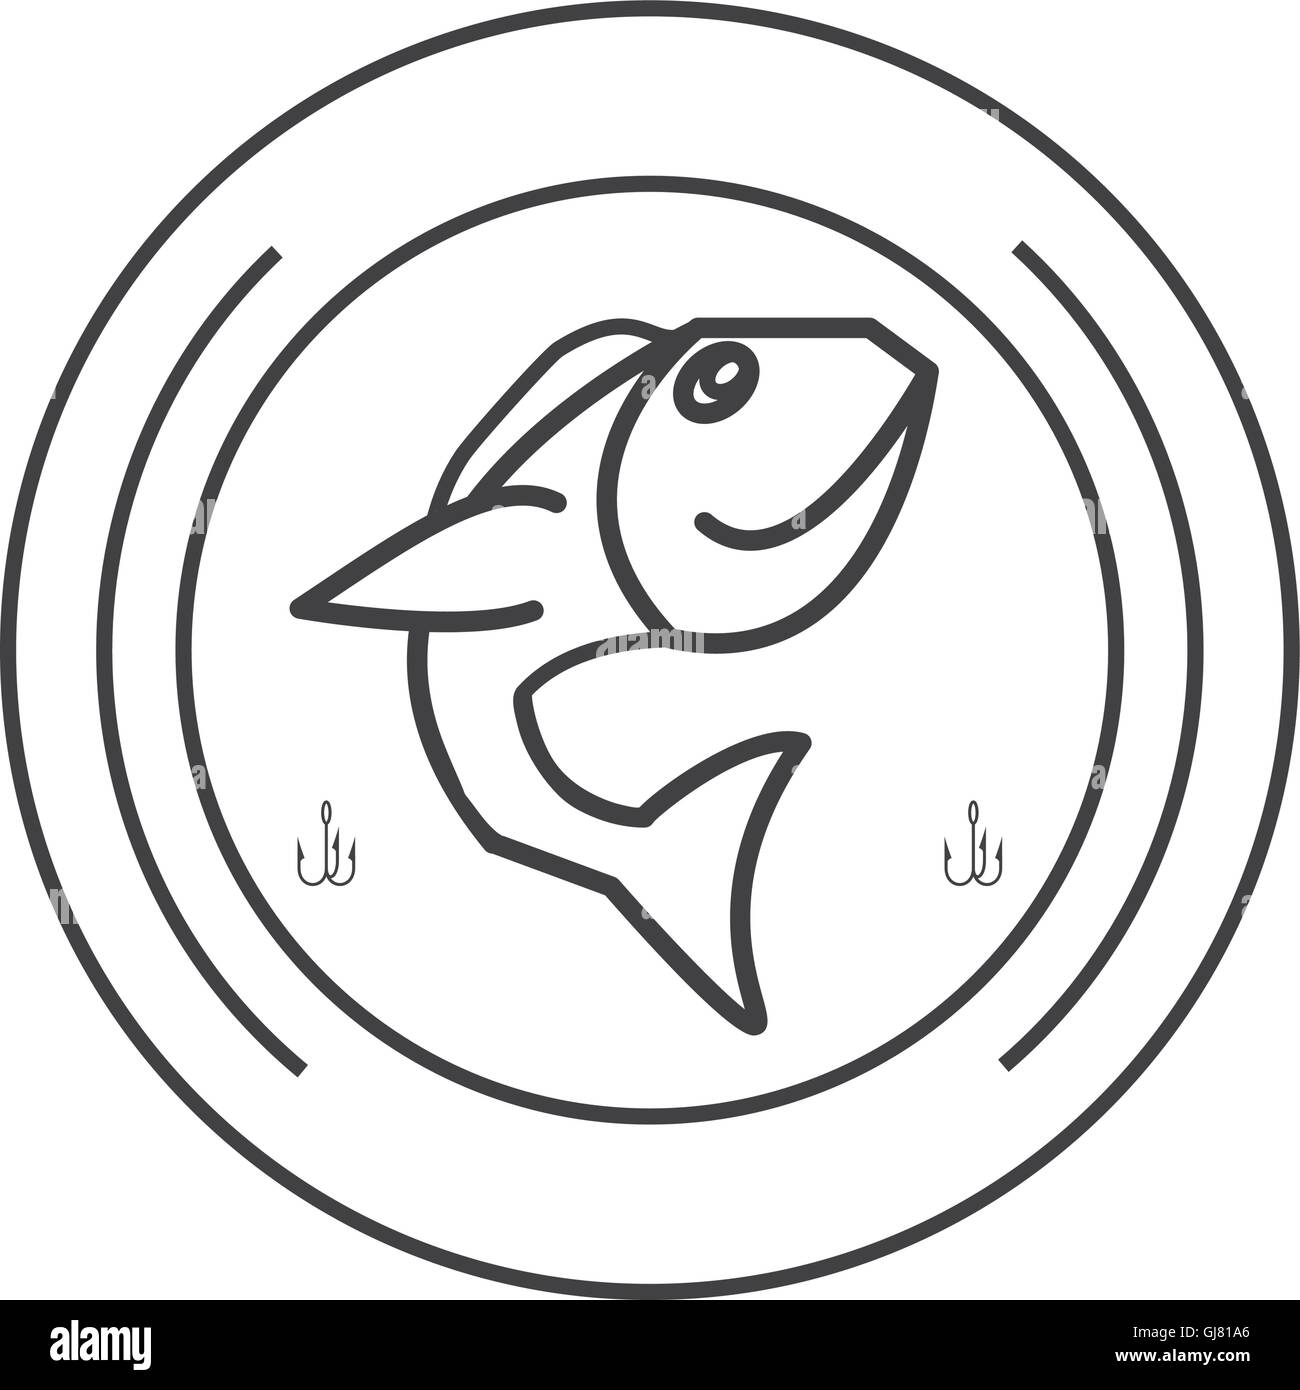 fishing emblem icon Stock Vector